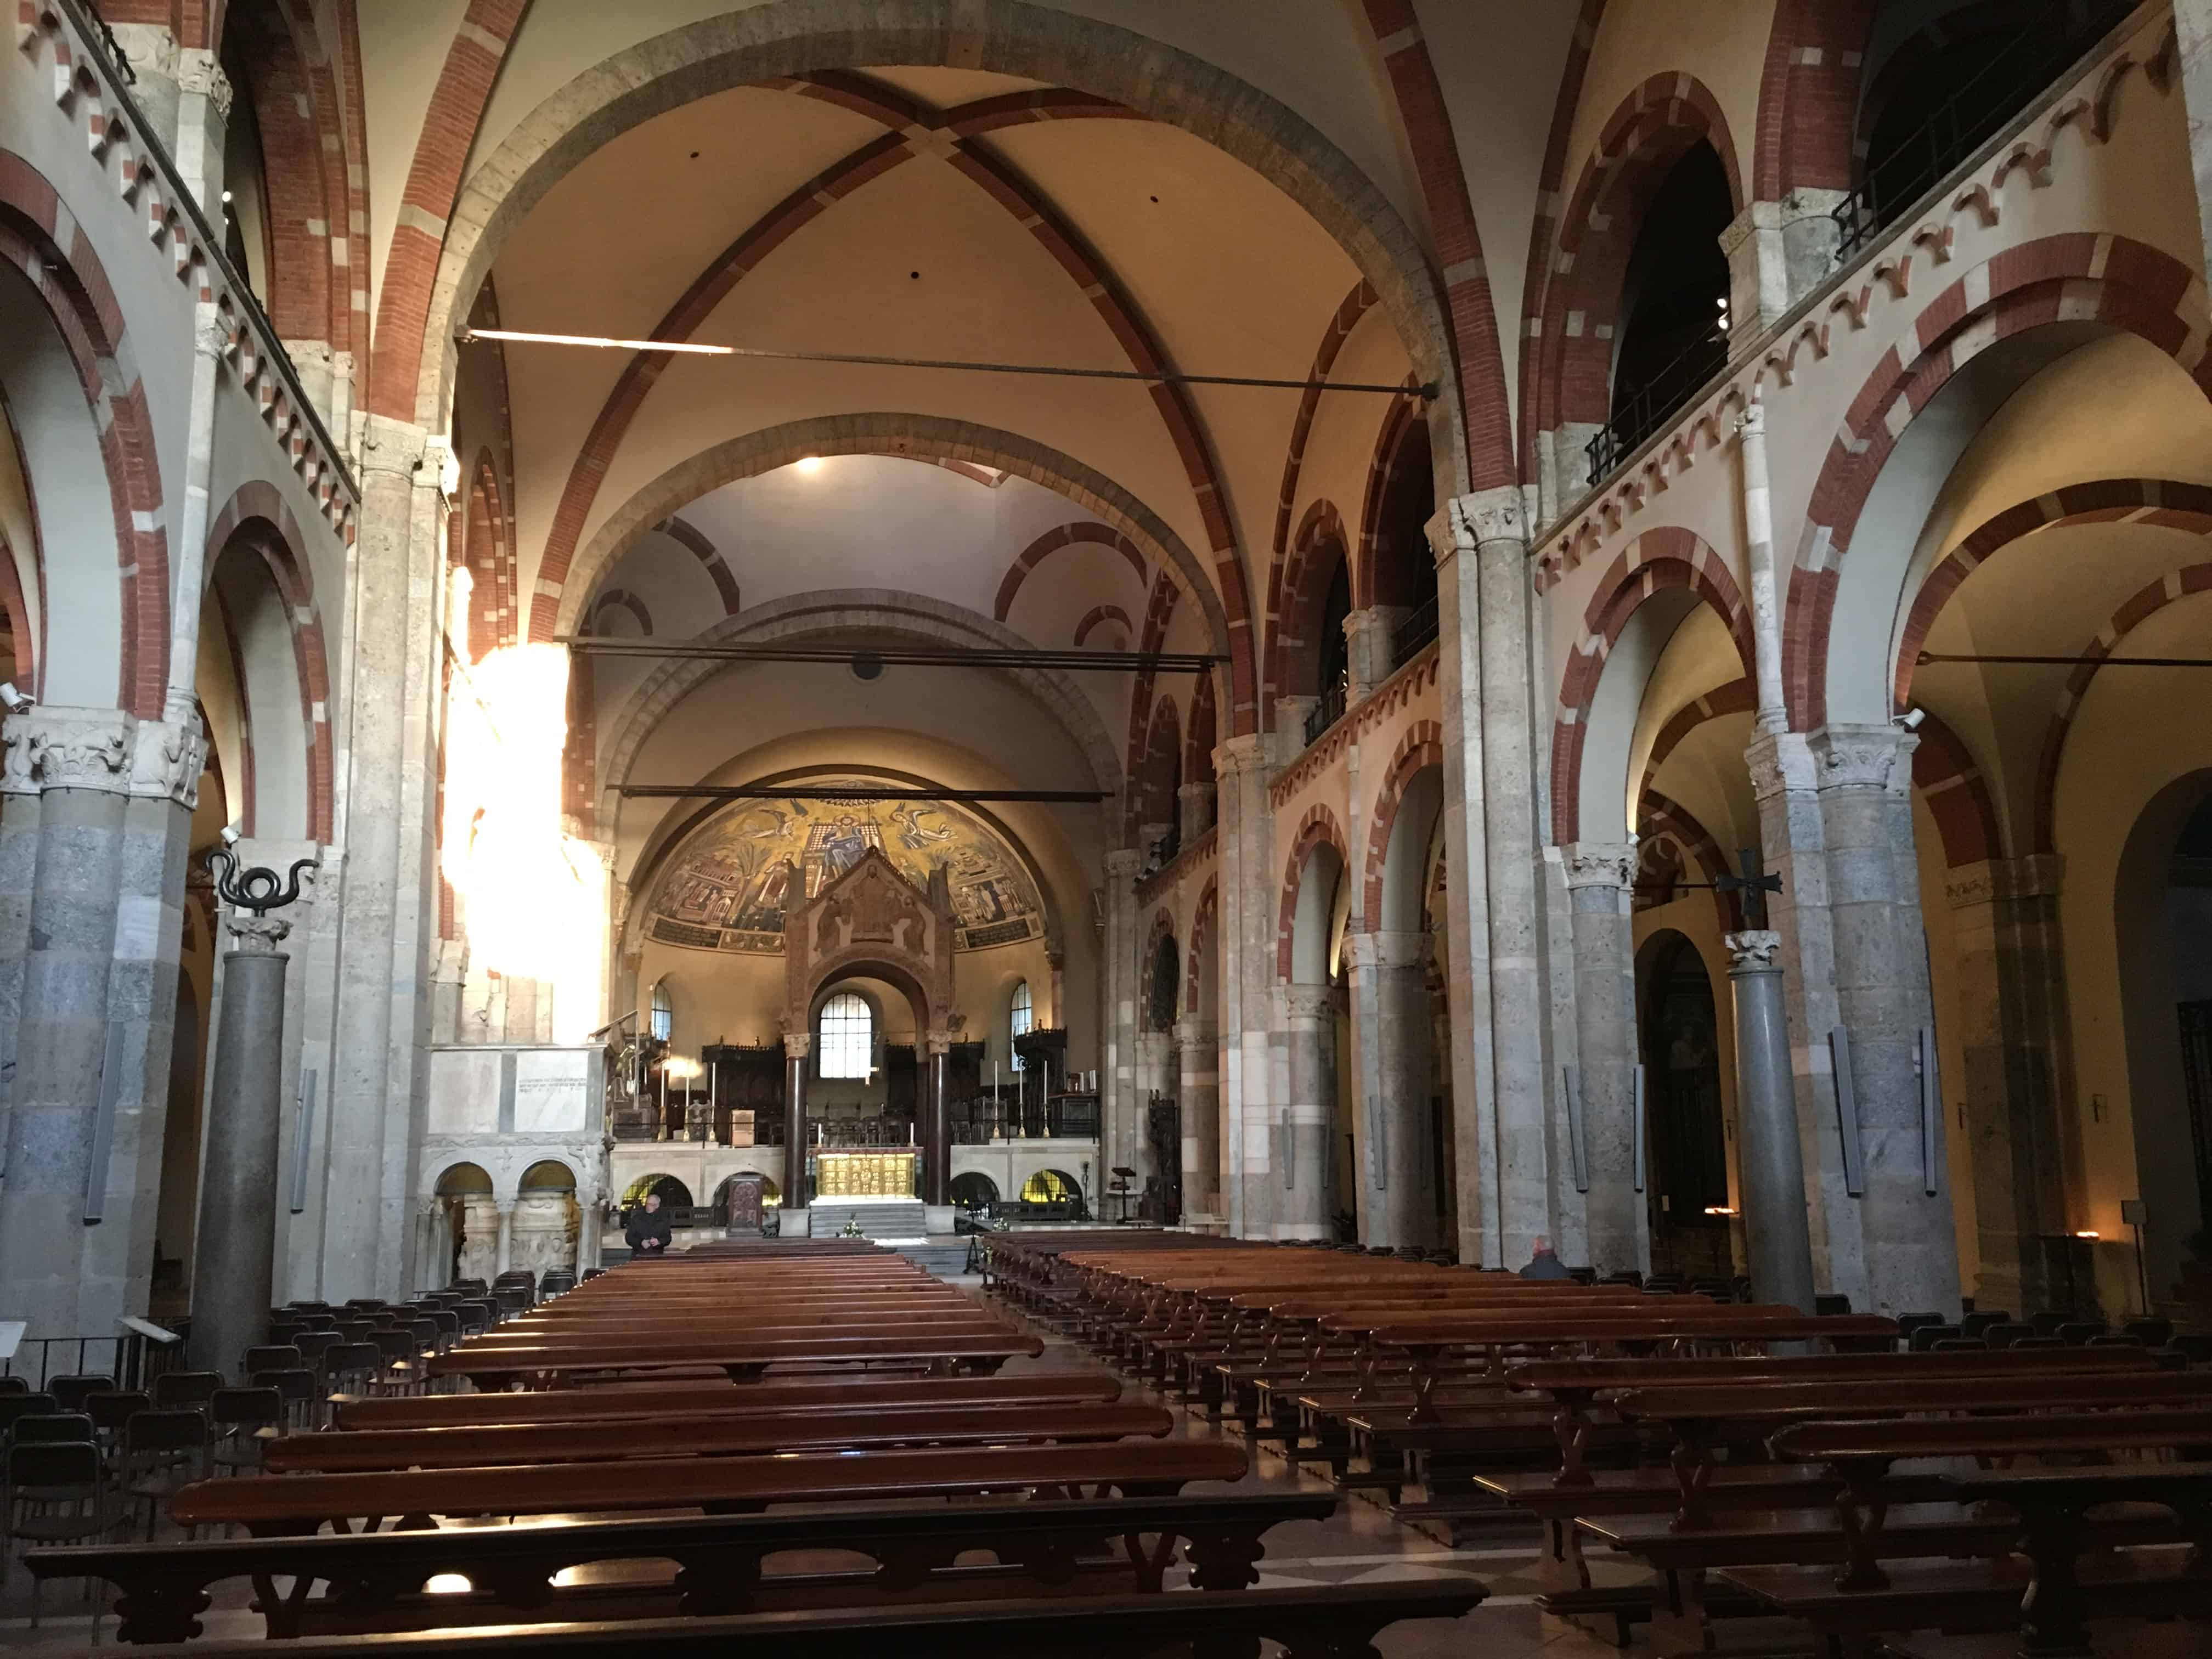 Nave at the Basilica of Saint Ambrose in Milan, Italy